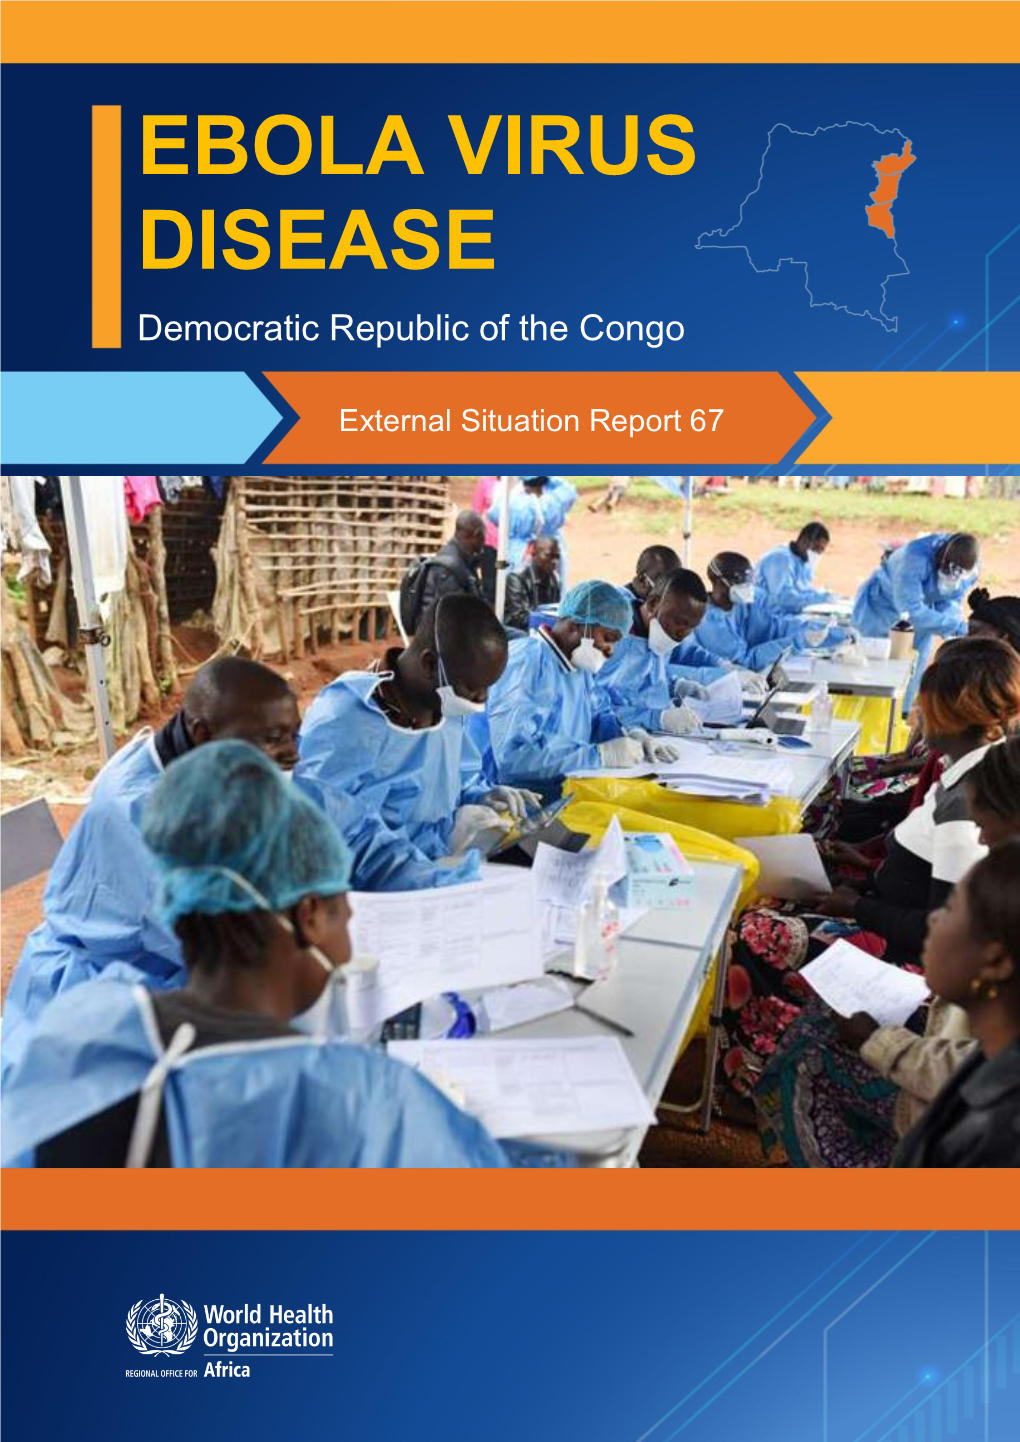 Ebola Virus Disease (EVD) in the Democratic Republic of the Congo